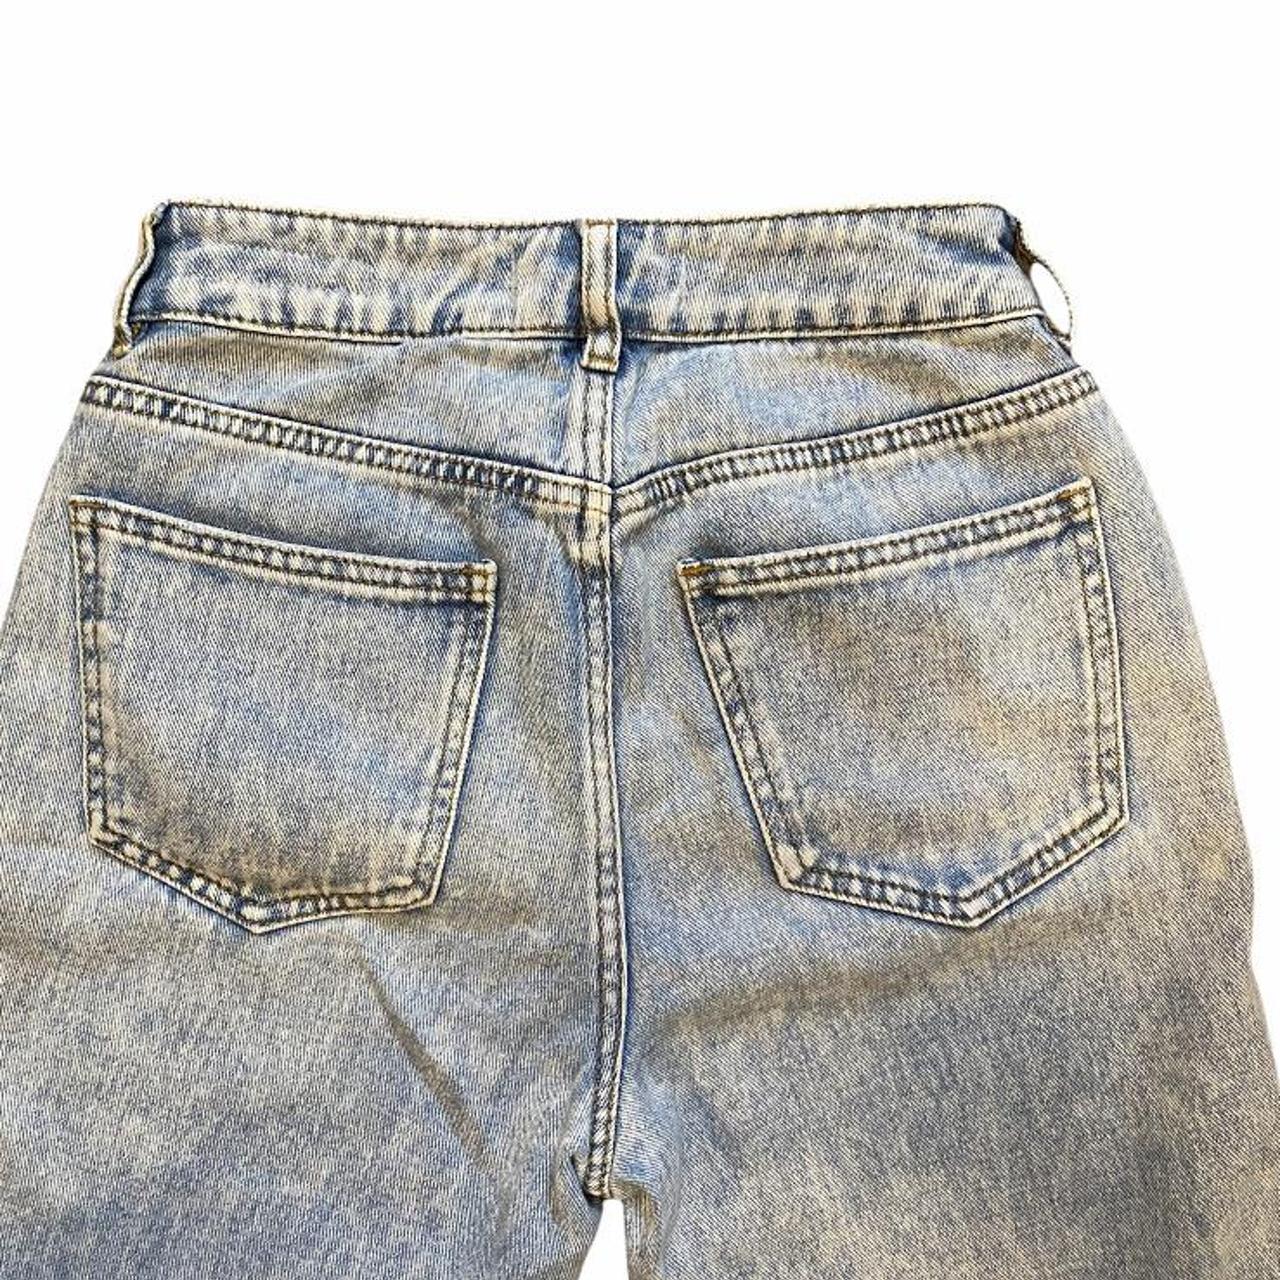 Product Image 3 - Pacsun light denim mom jeans,